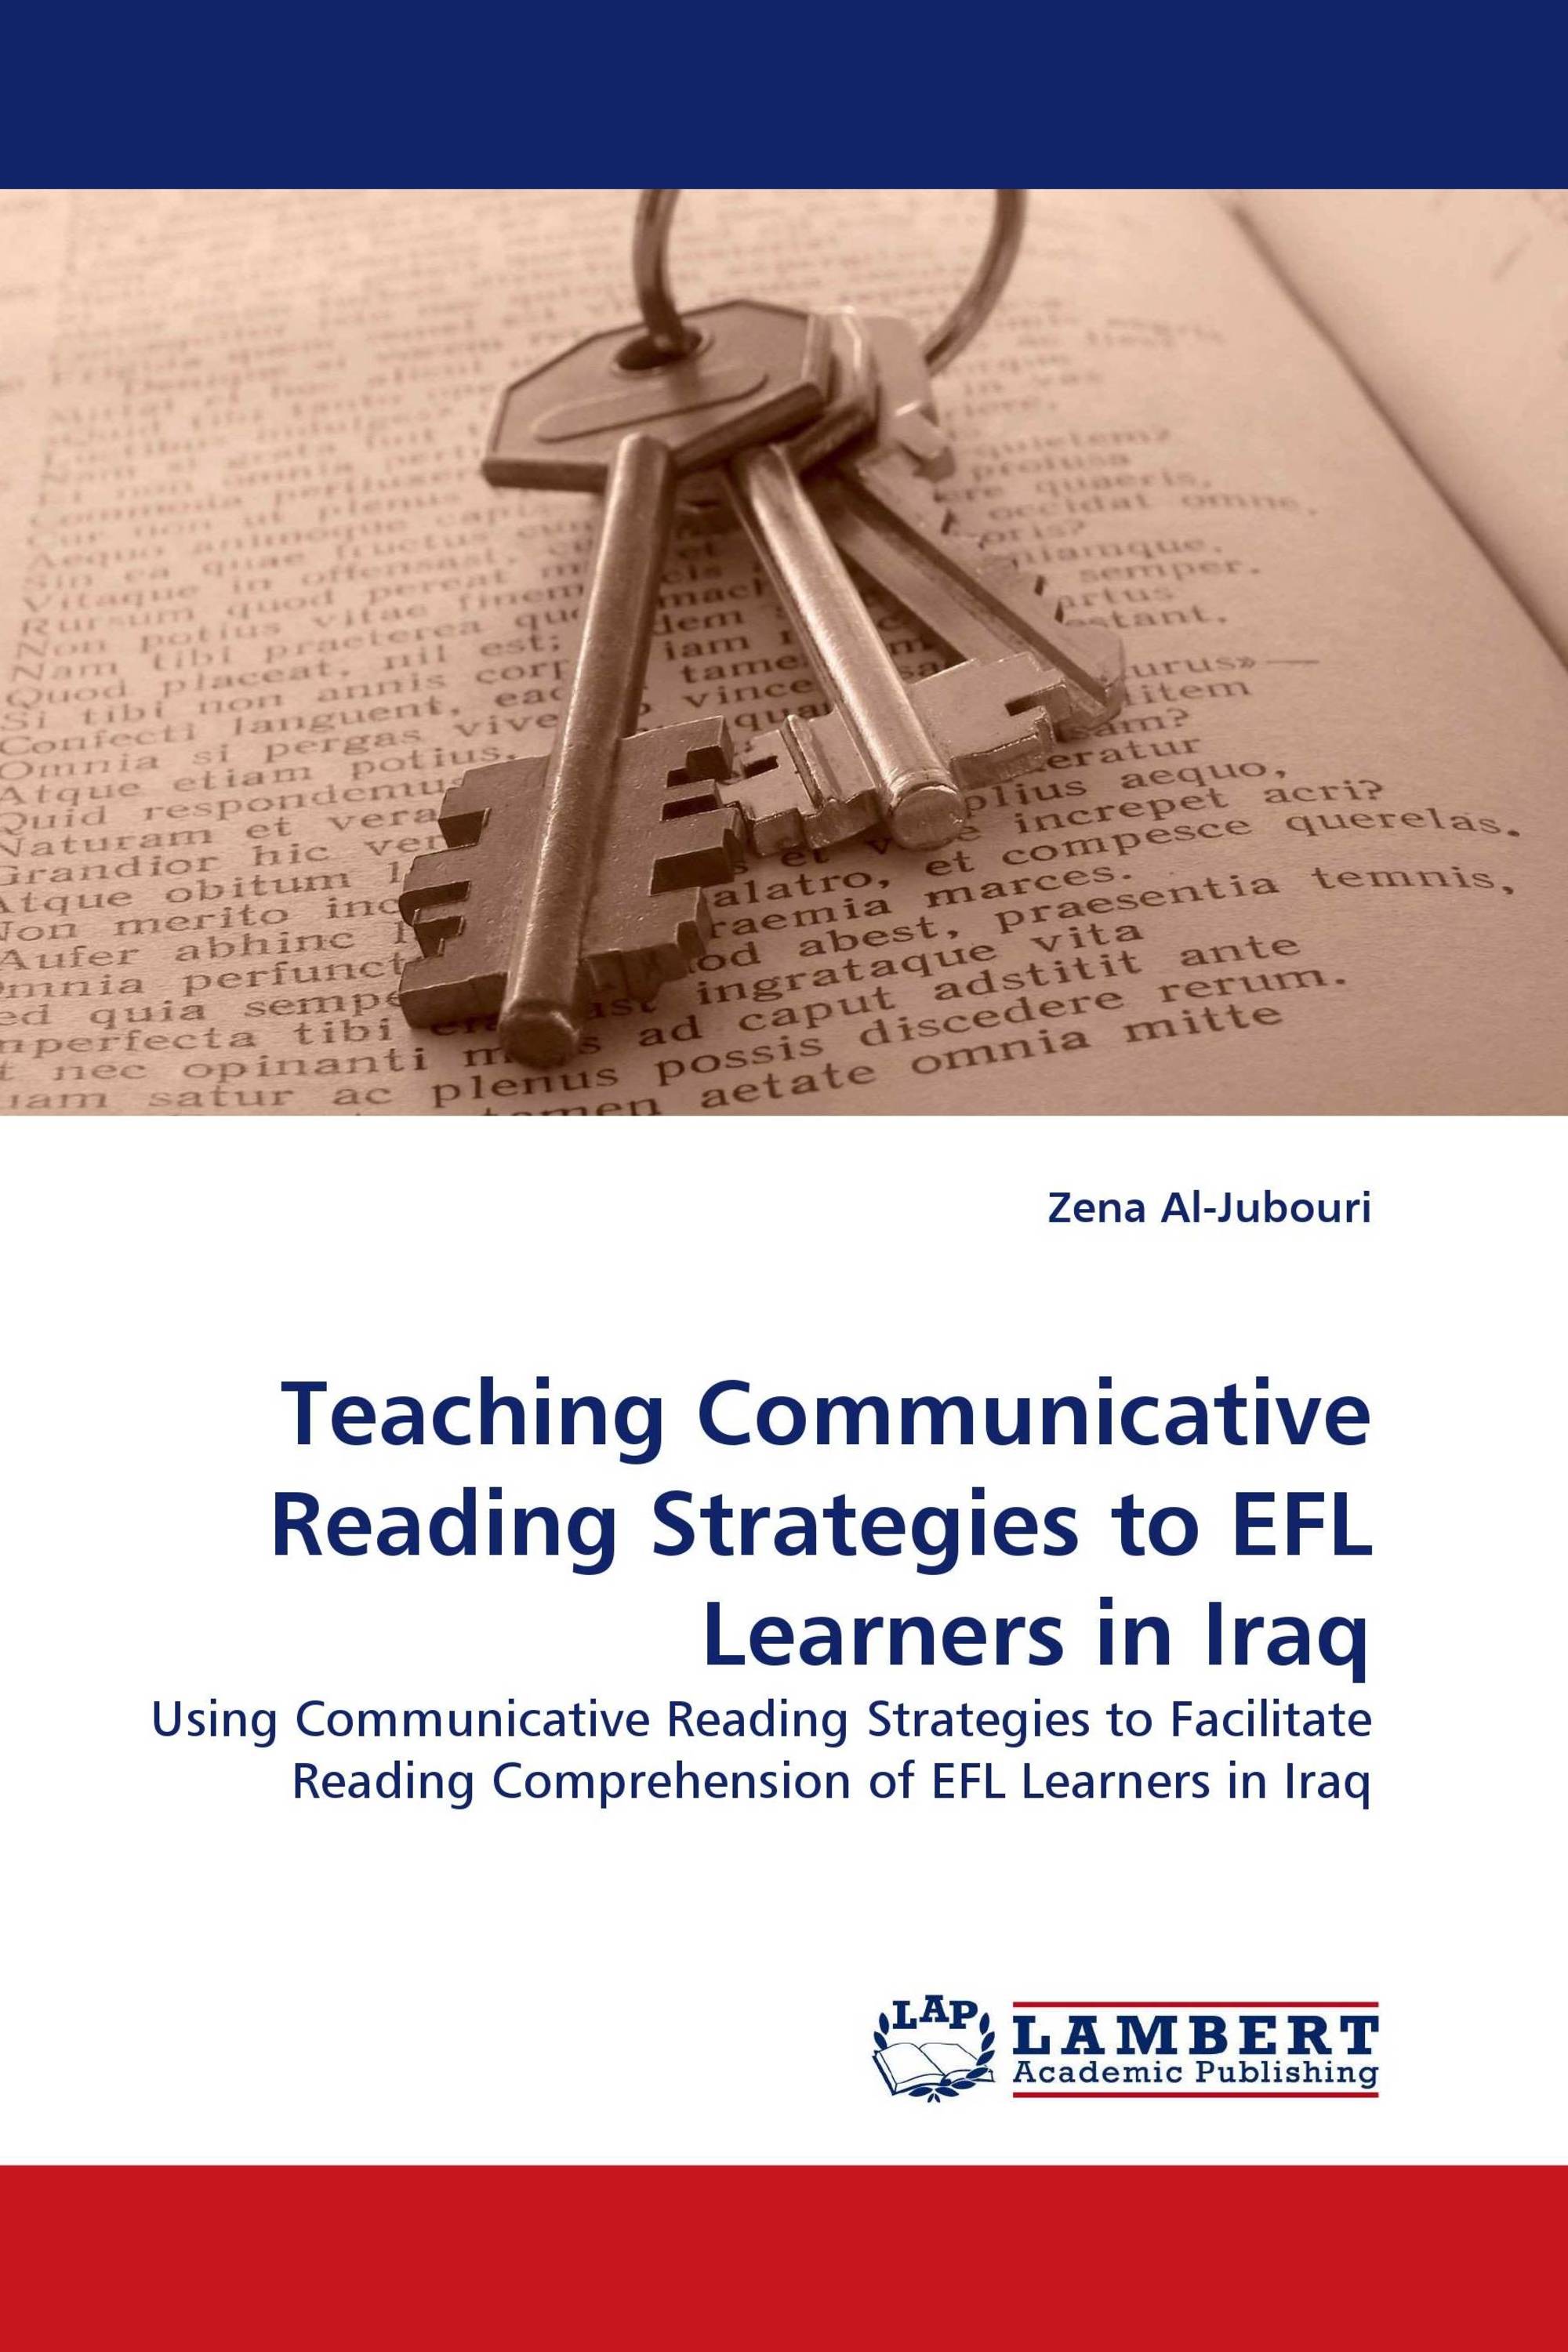 Teaching Communicative Reading Strategies to EFL Learners in Iraq